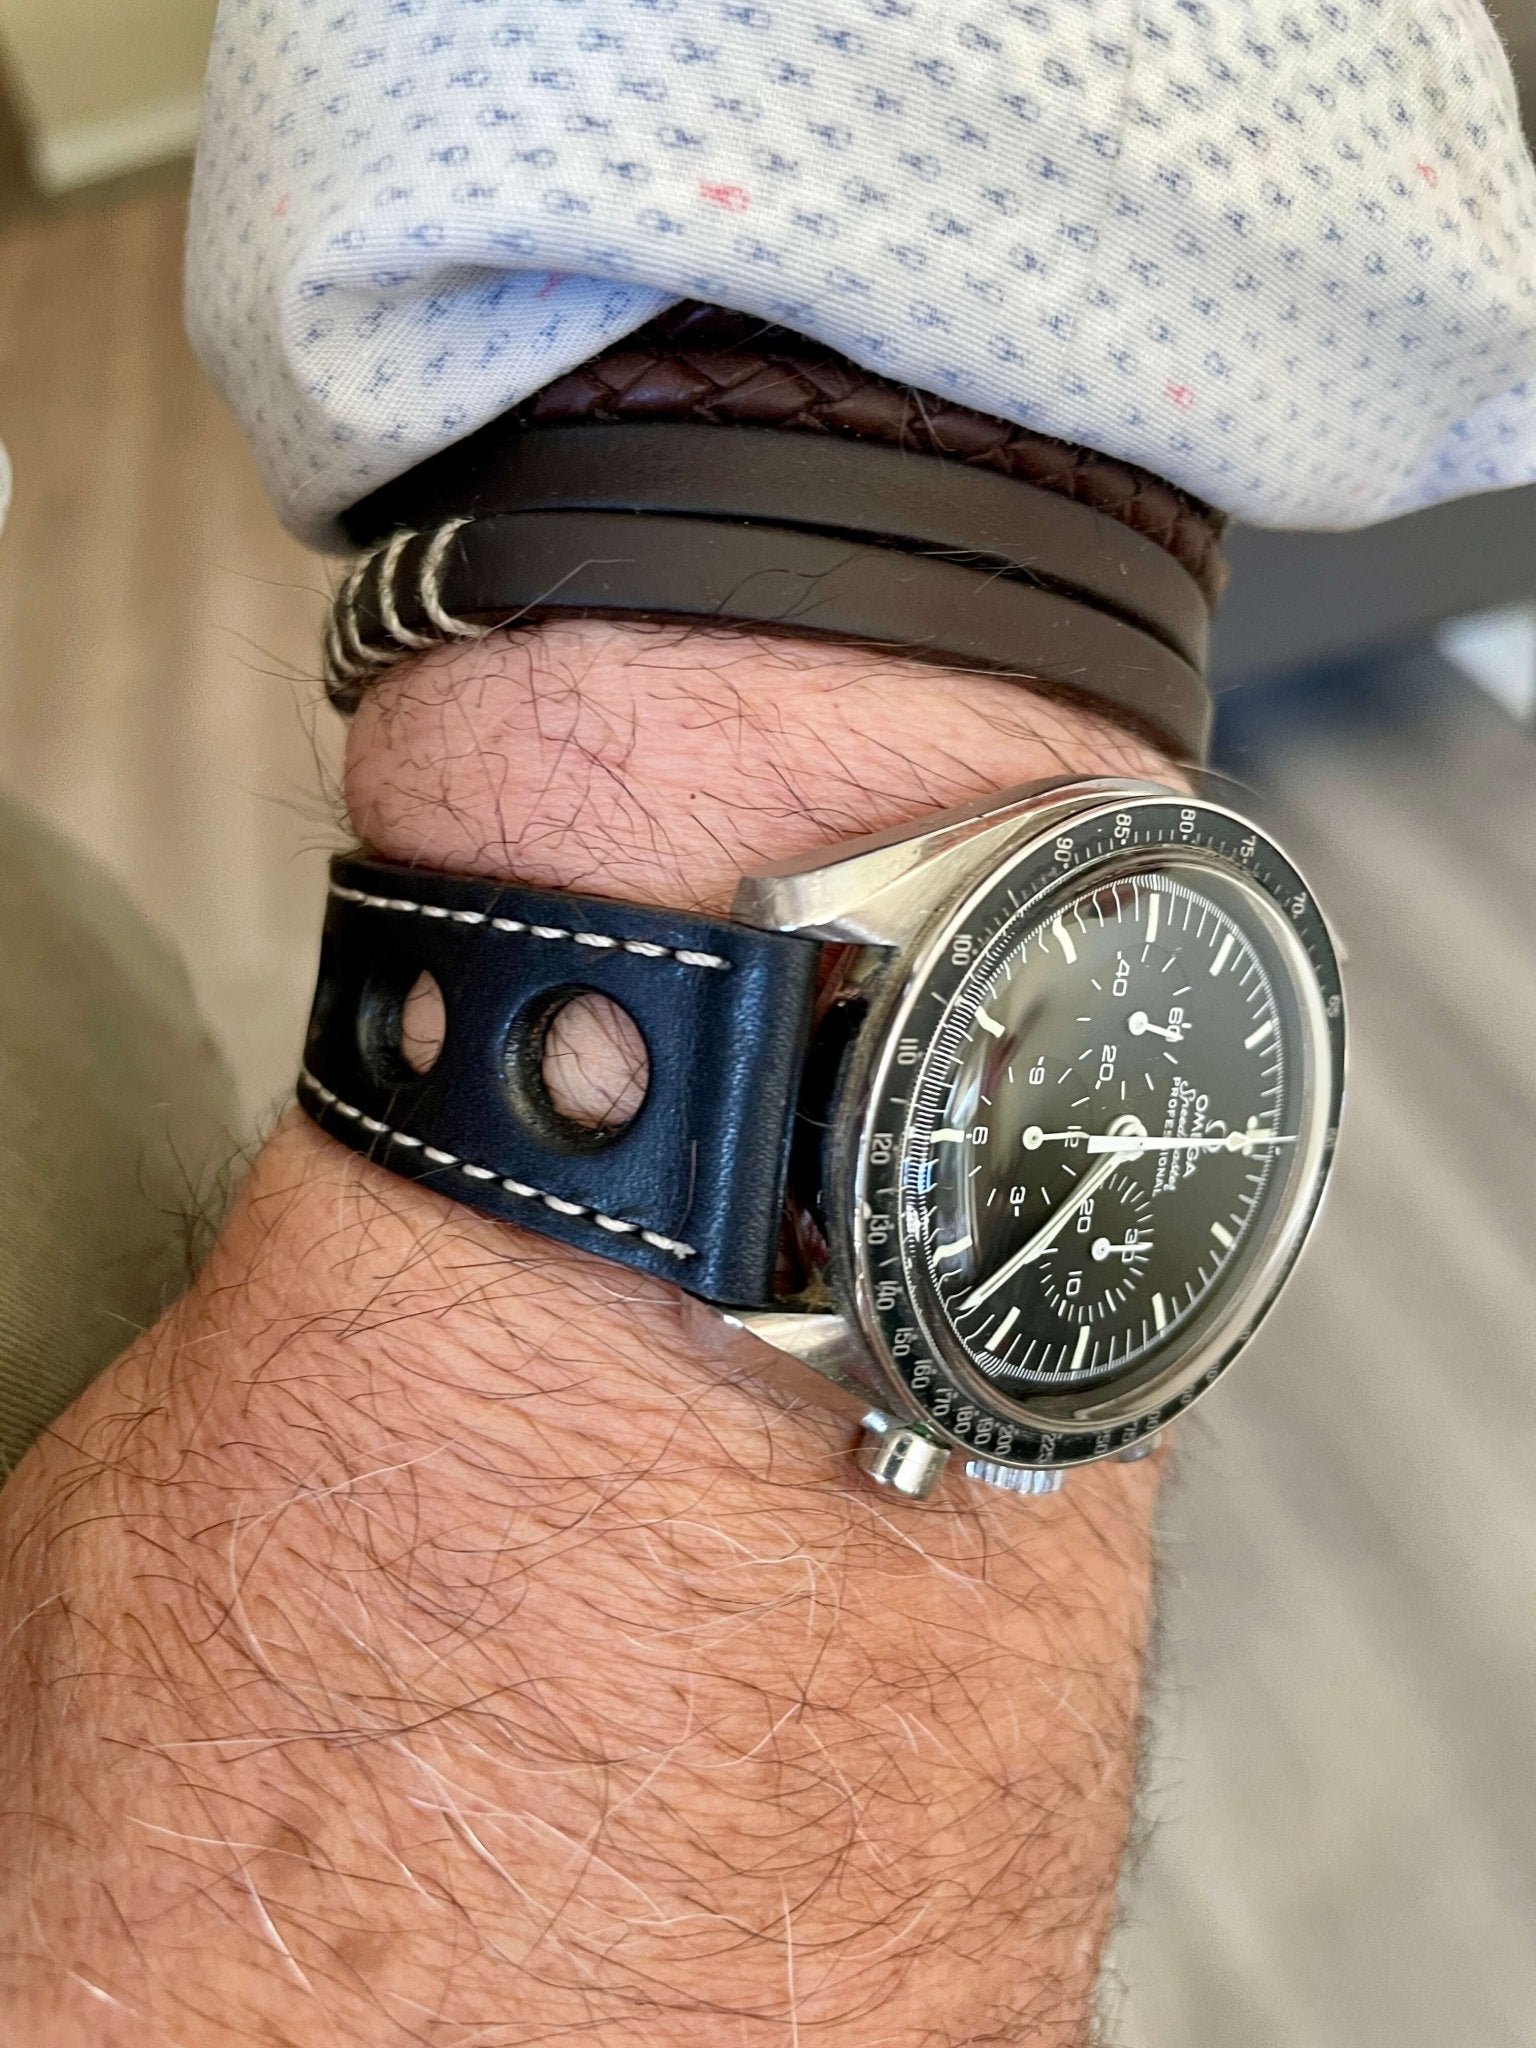 Malt Padded Italian Vintage Leather Watch Band